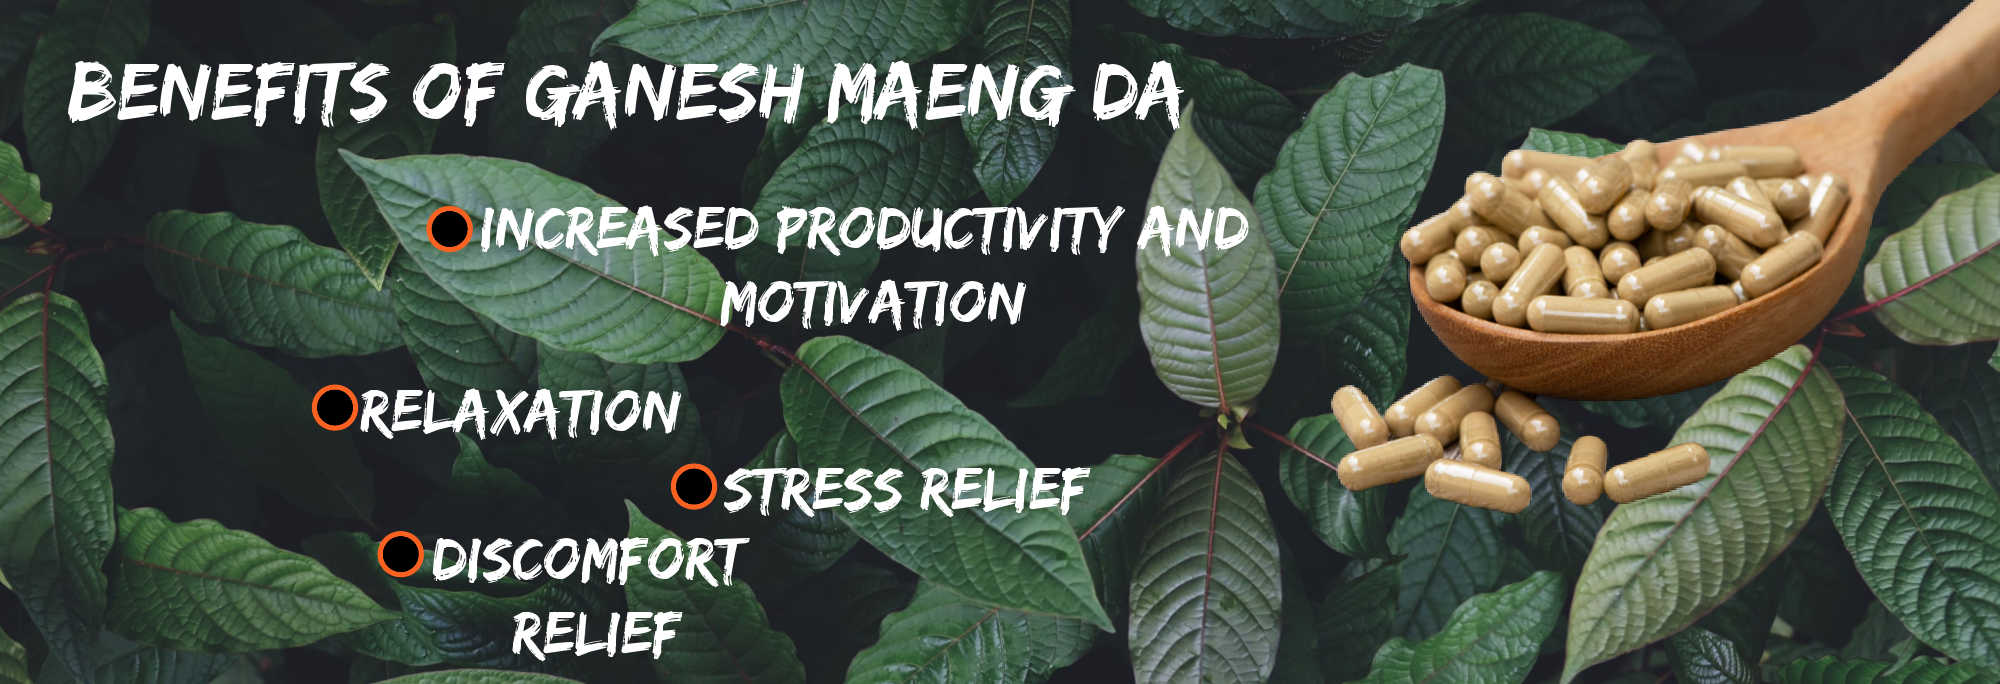 image of ganesh maeng da benefits